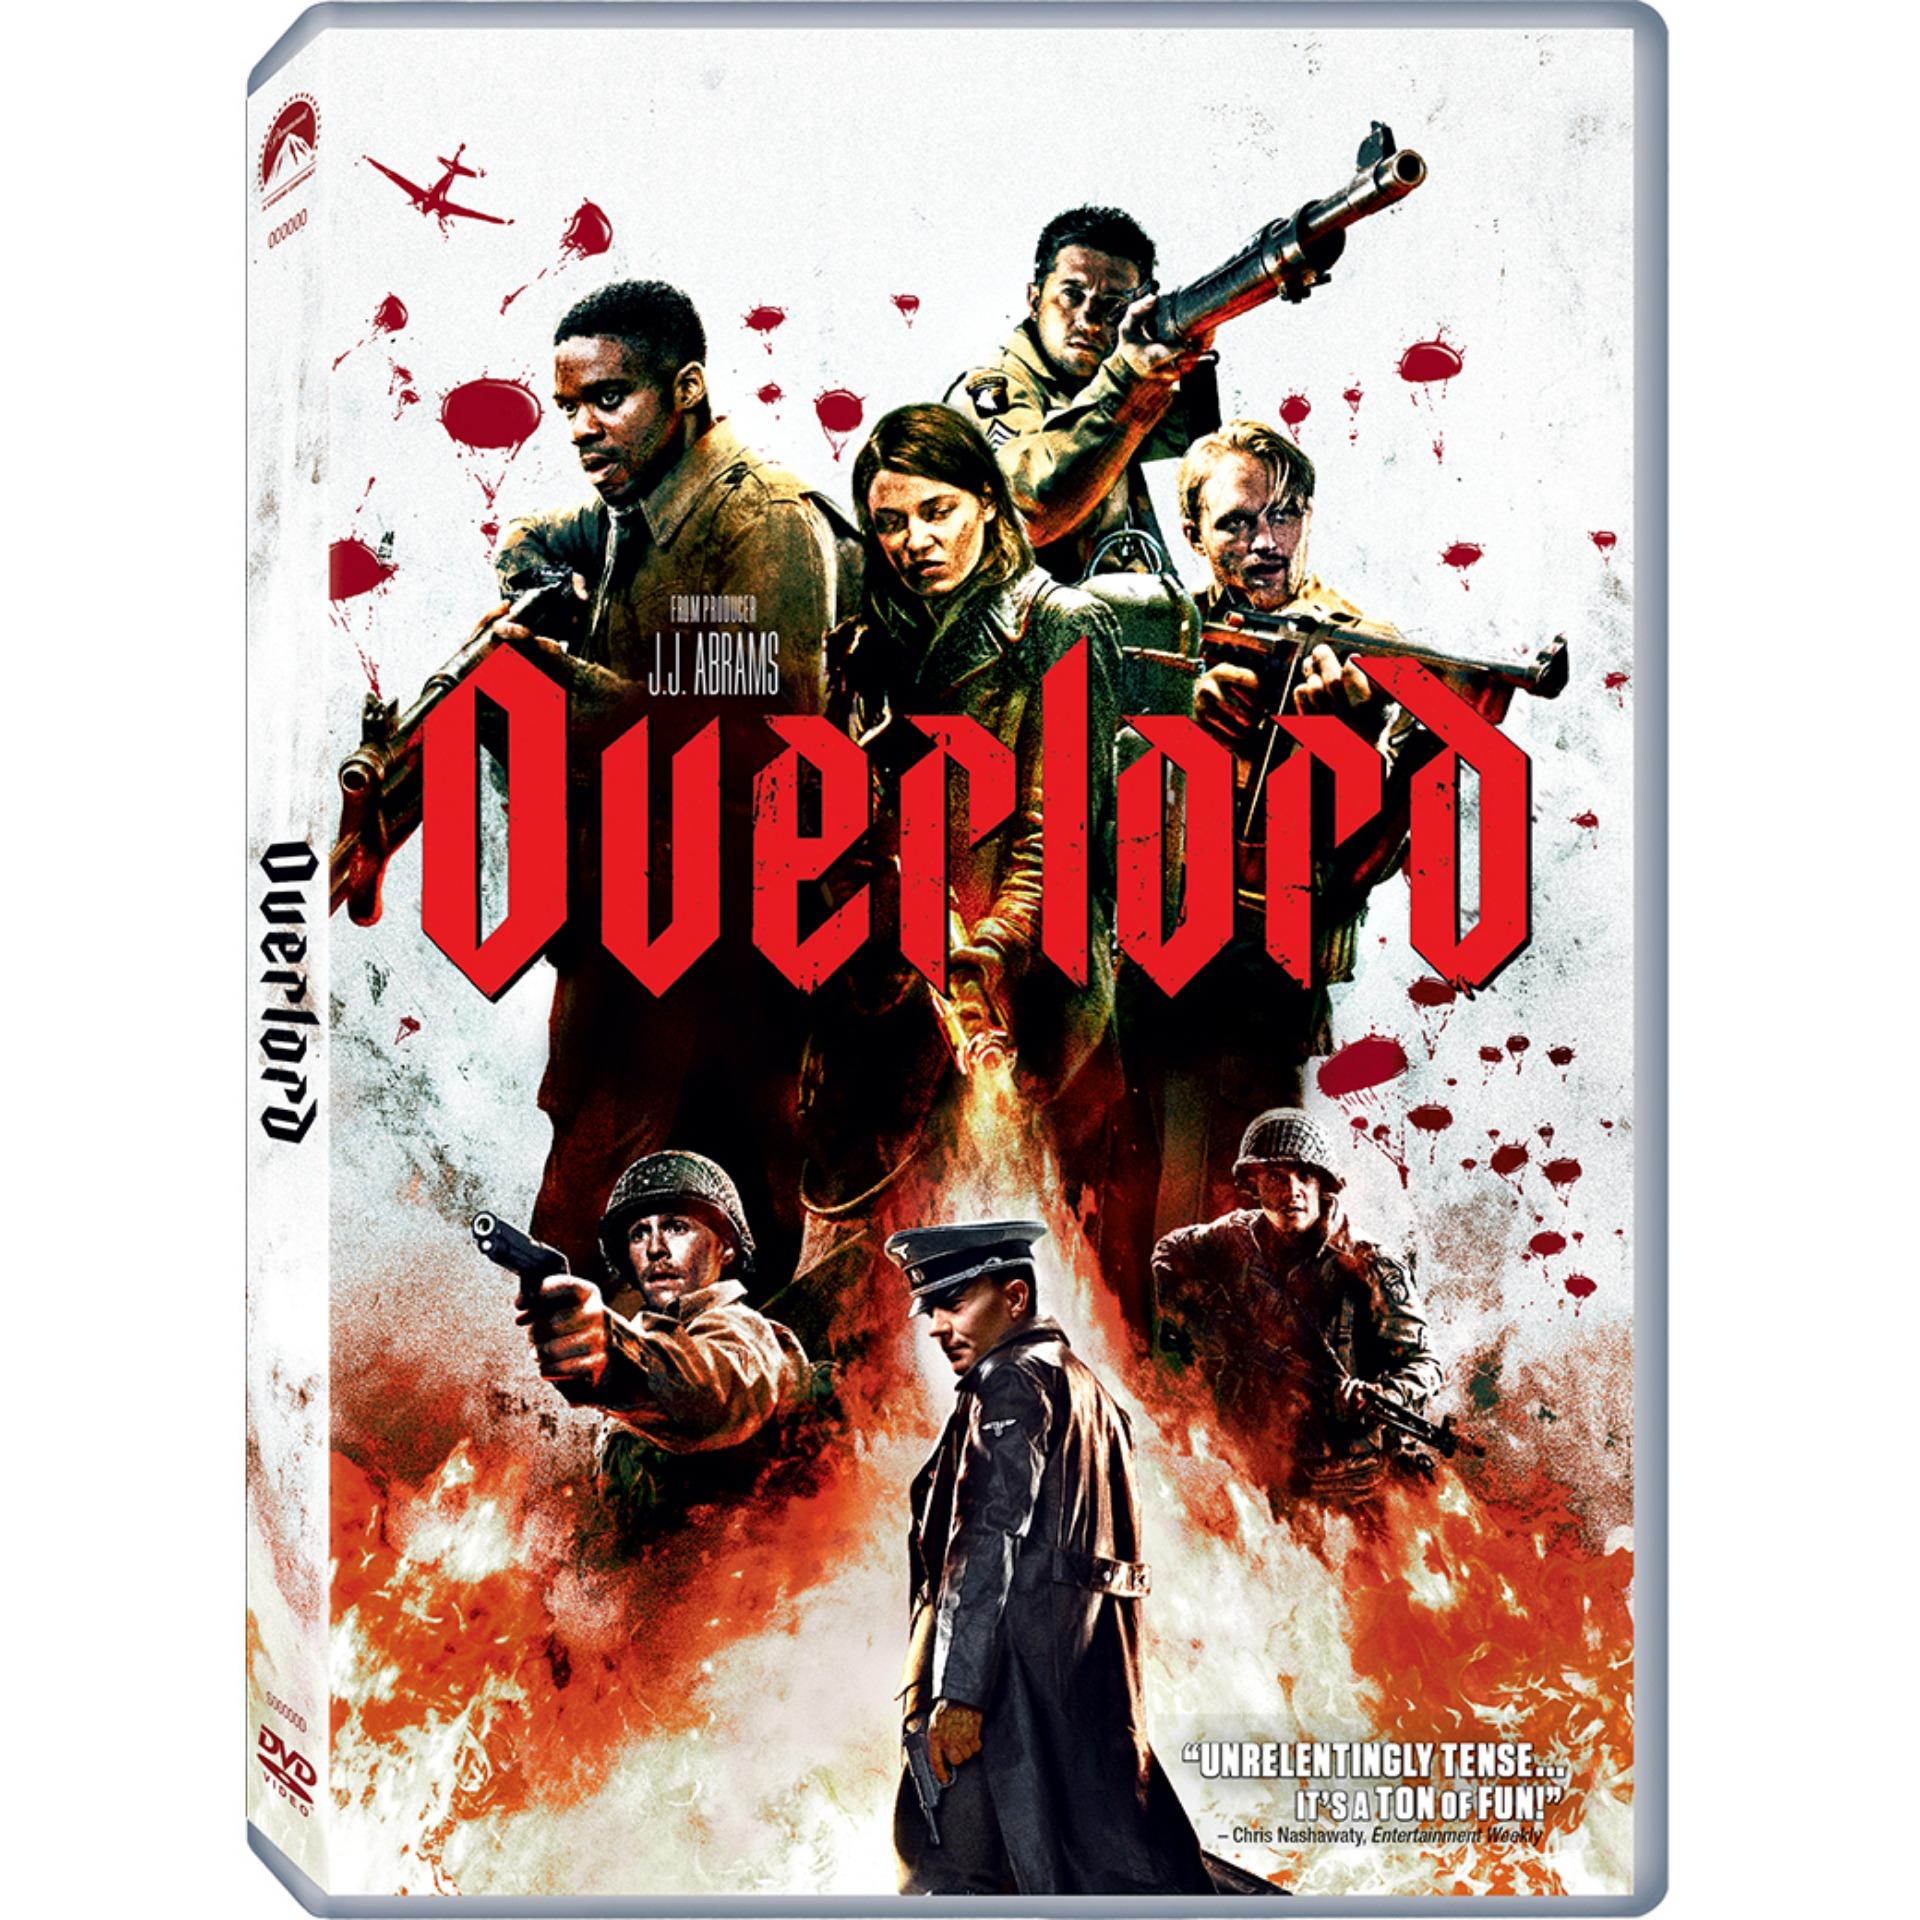 Media Play Overlord ปฏิบัติการโอเวอร์ลอร์ด (DVD)